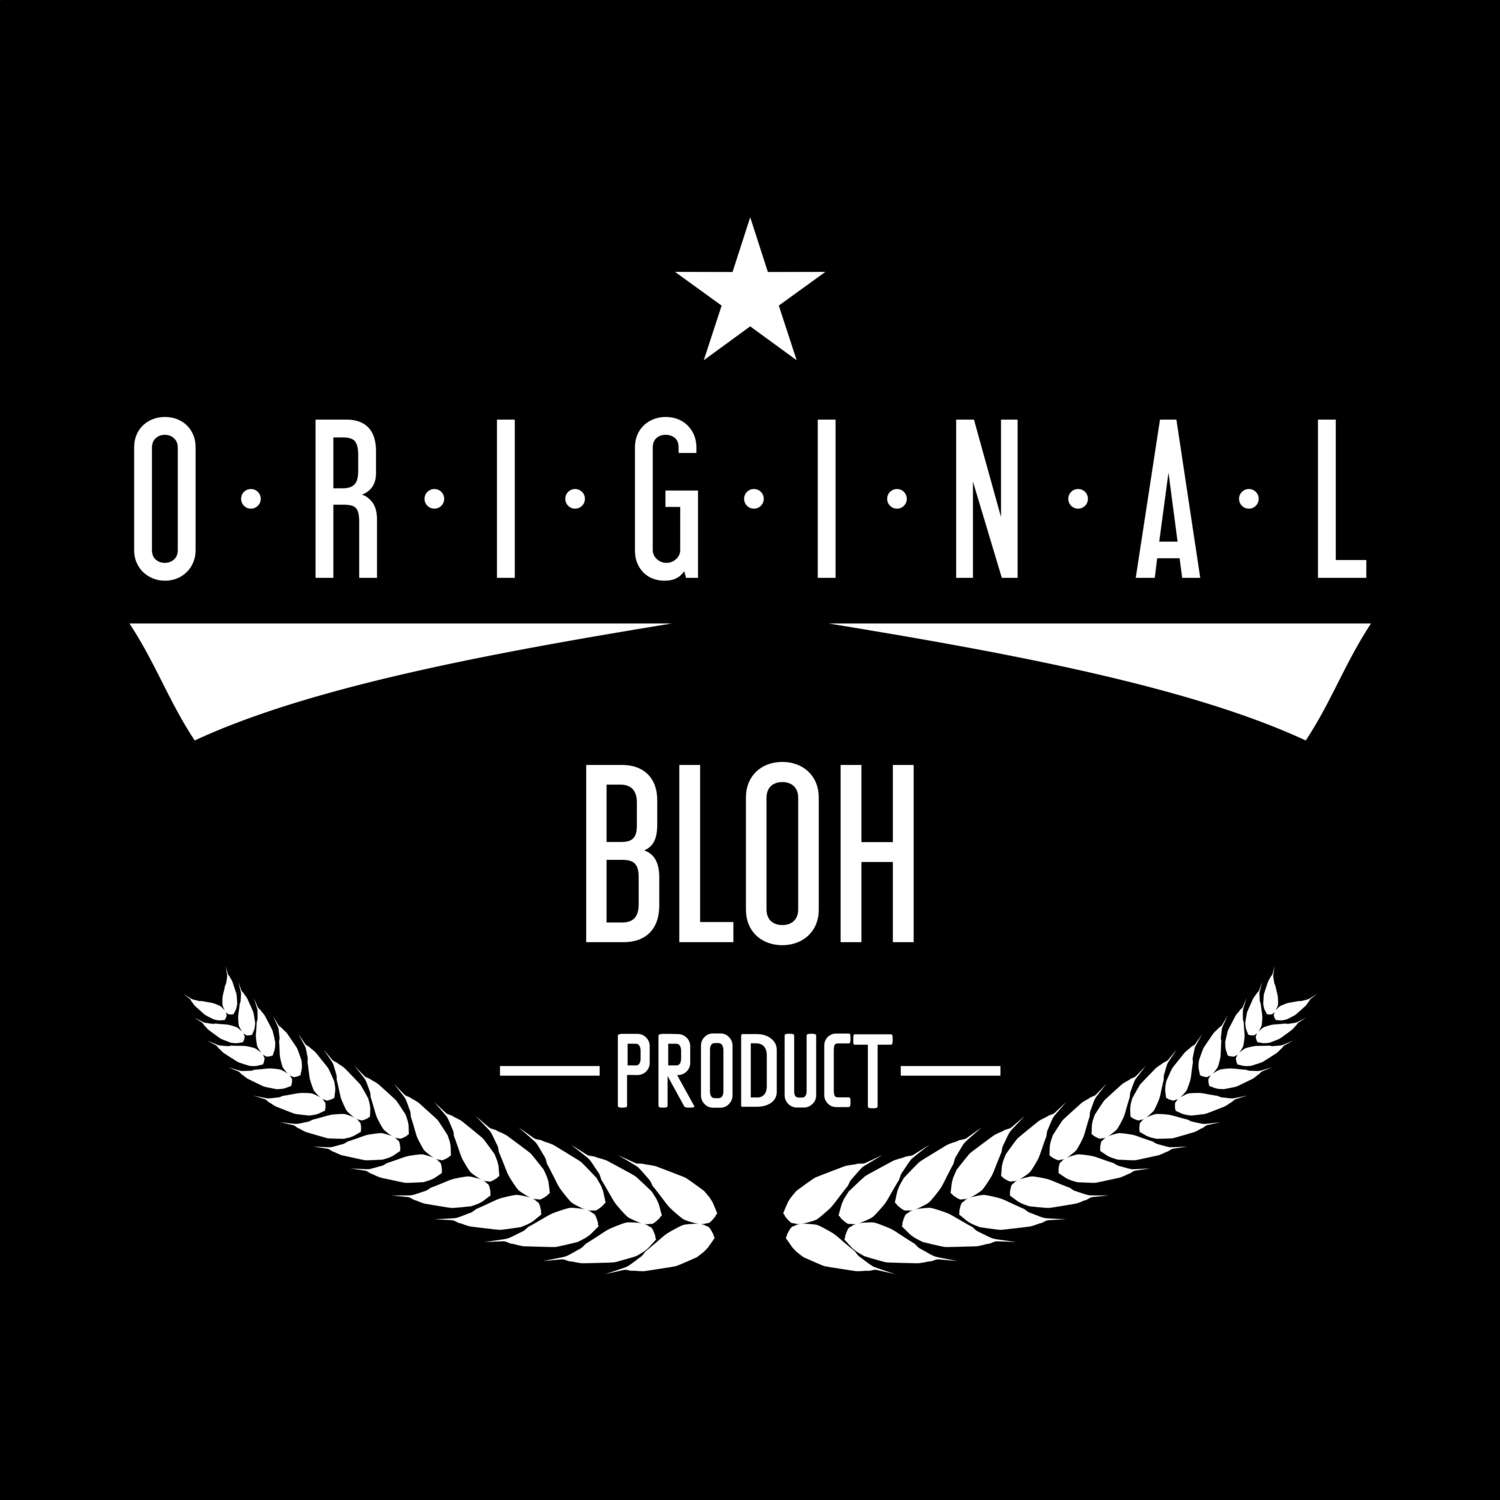 Bloh T-Shirt »Original Product«